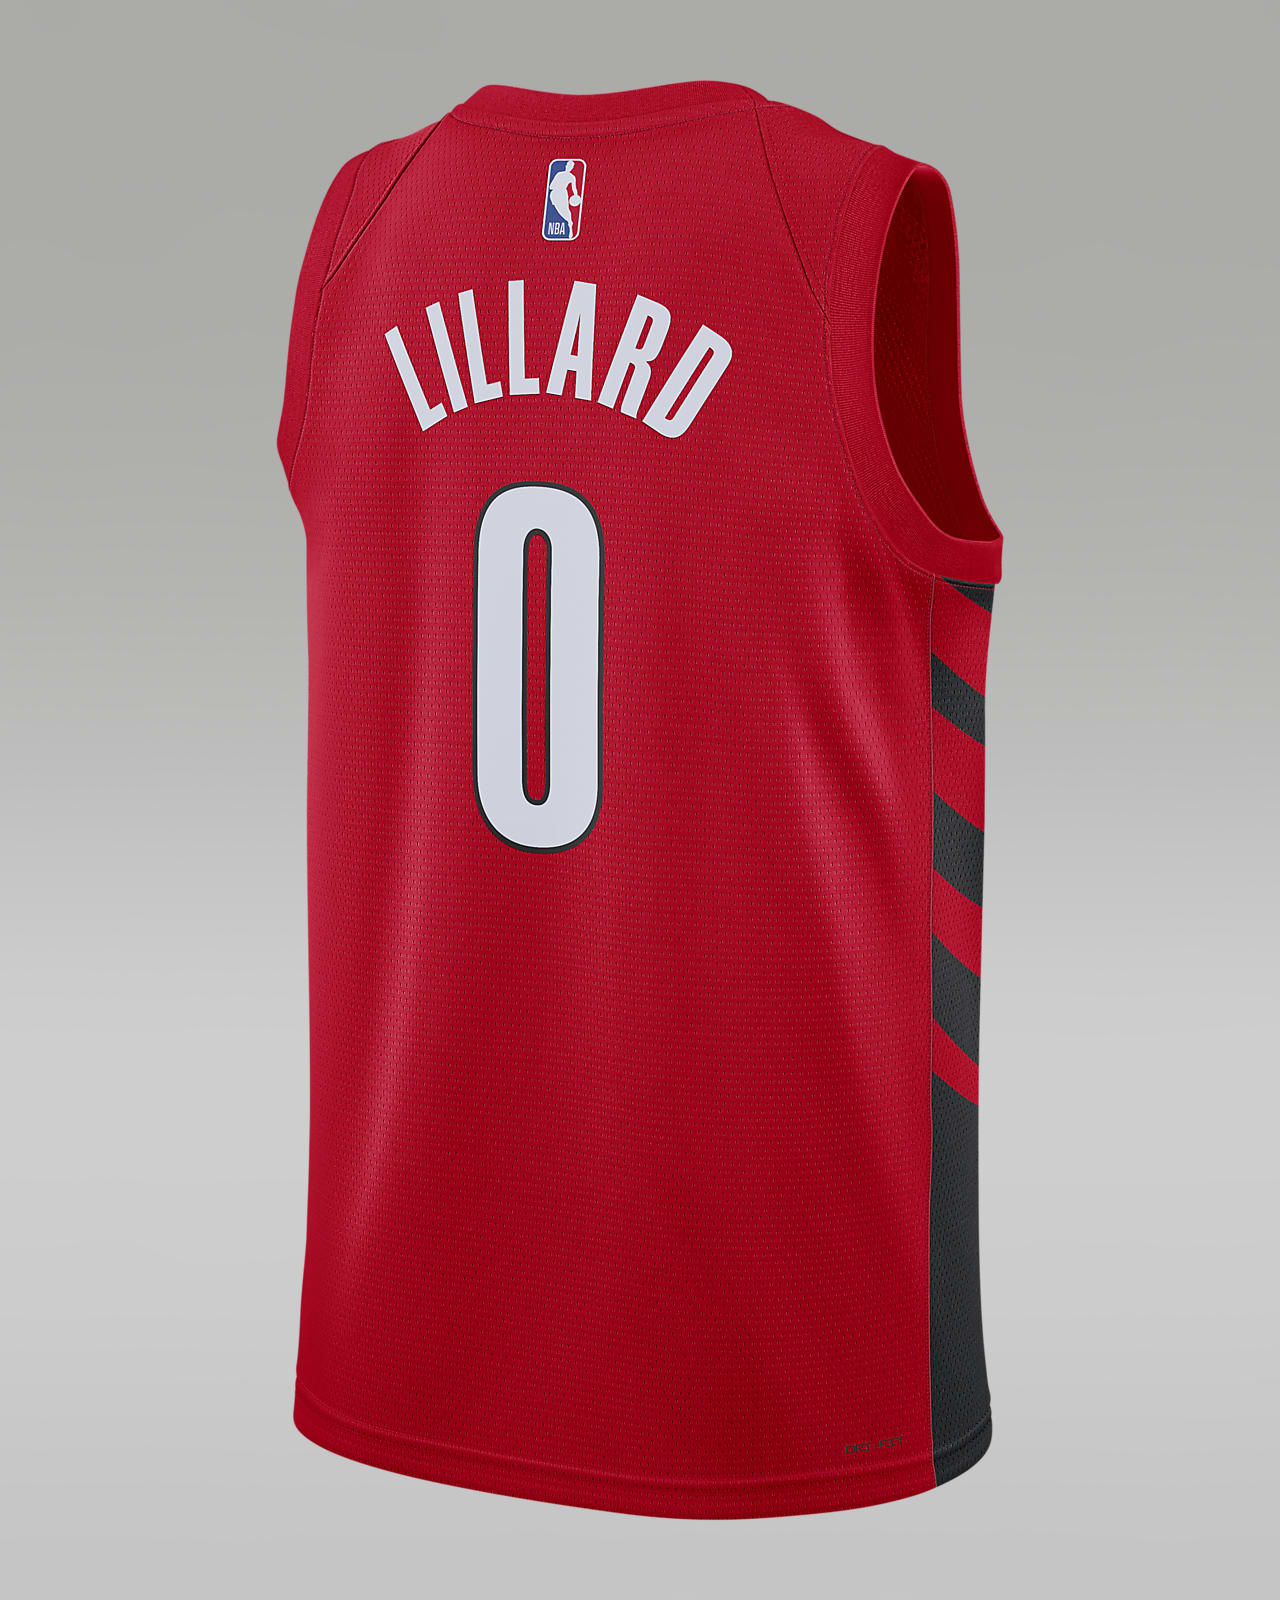 Portland Trail Blazers City Edition Men's Nike NBA T-Shirt.